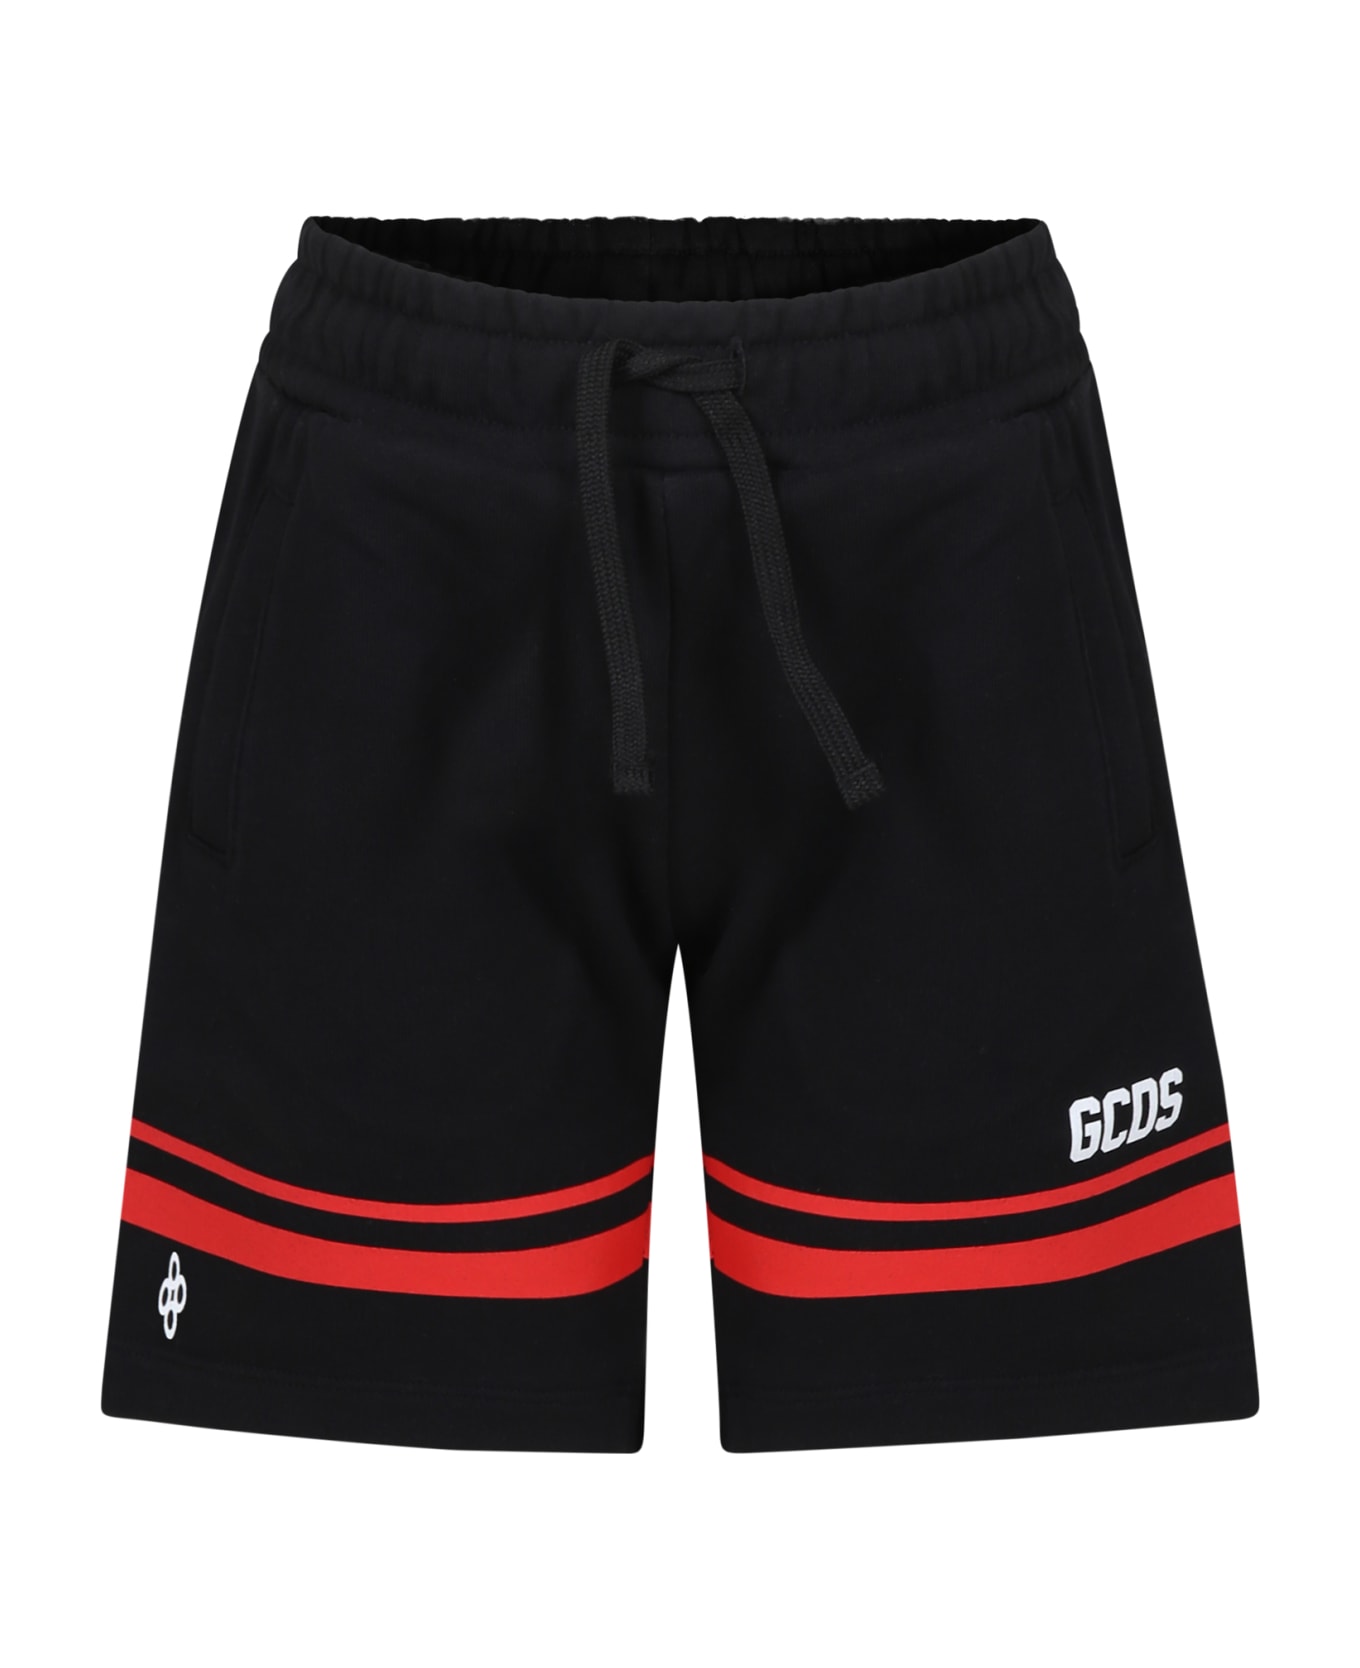 GCDS Mini Black Sports Shorts For Boy With Logo - Black